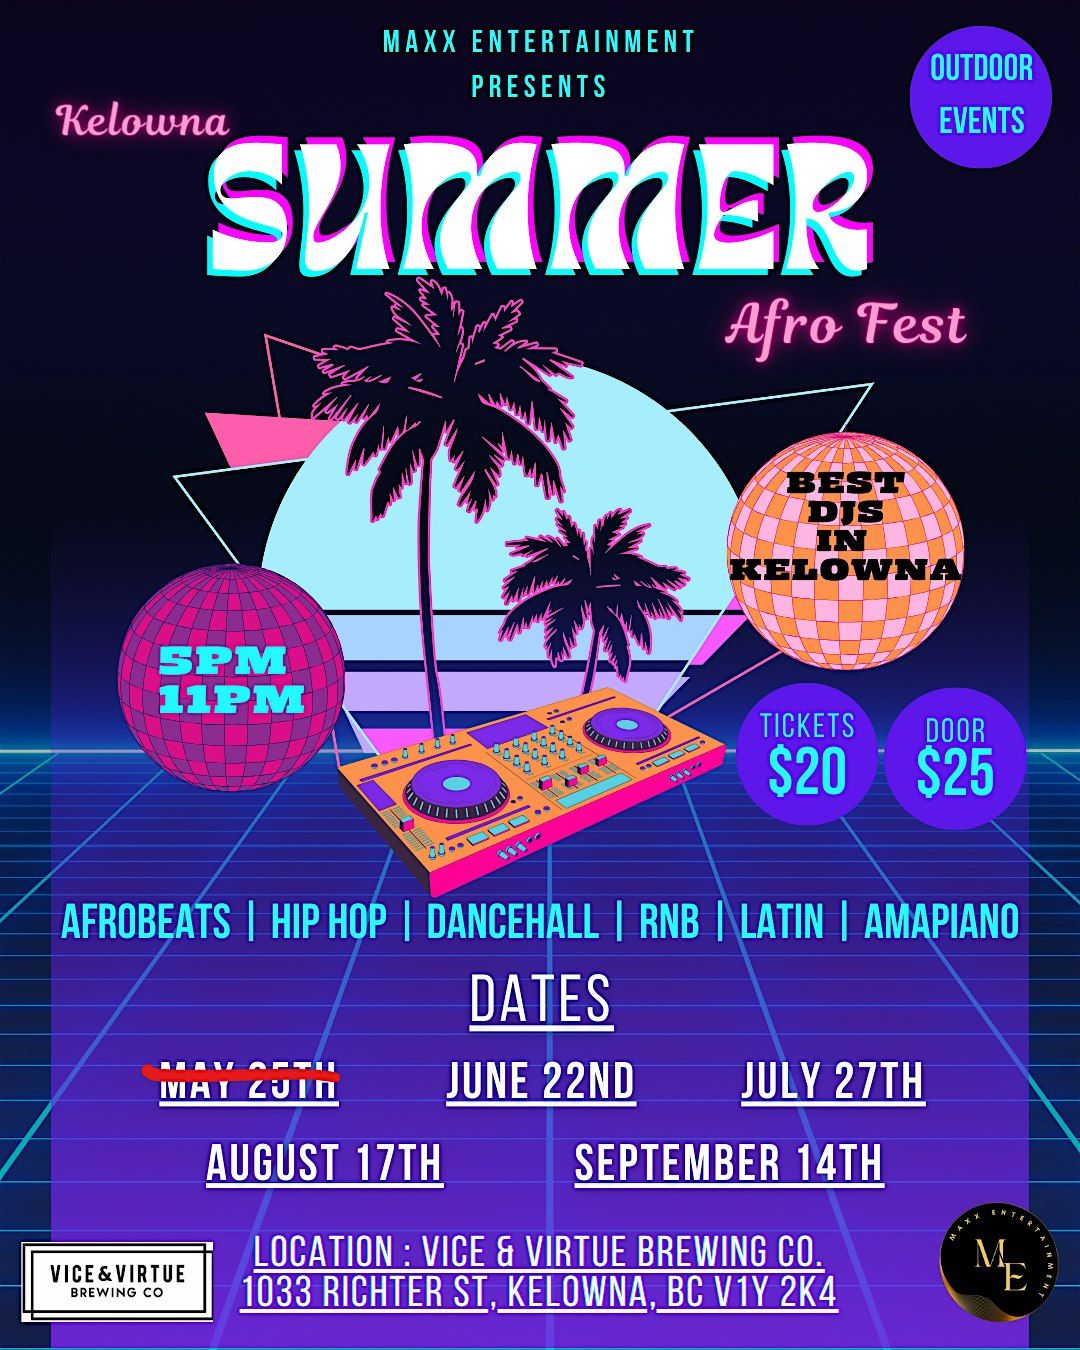 Kelowna Summer Afro Fest  2nd Edition